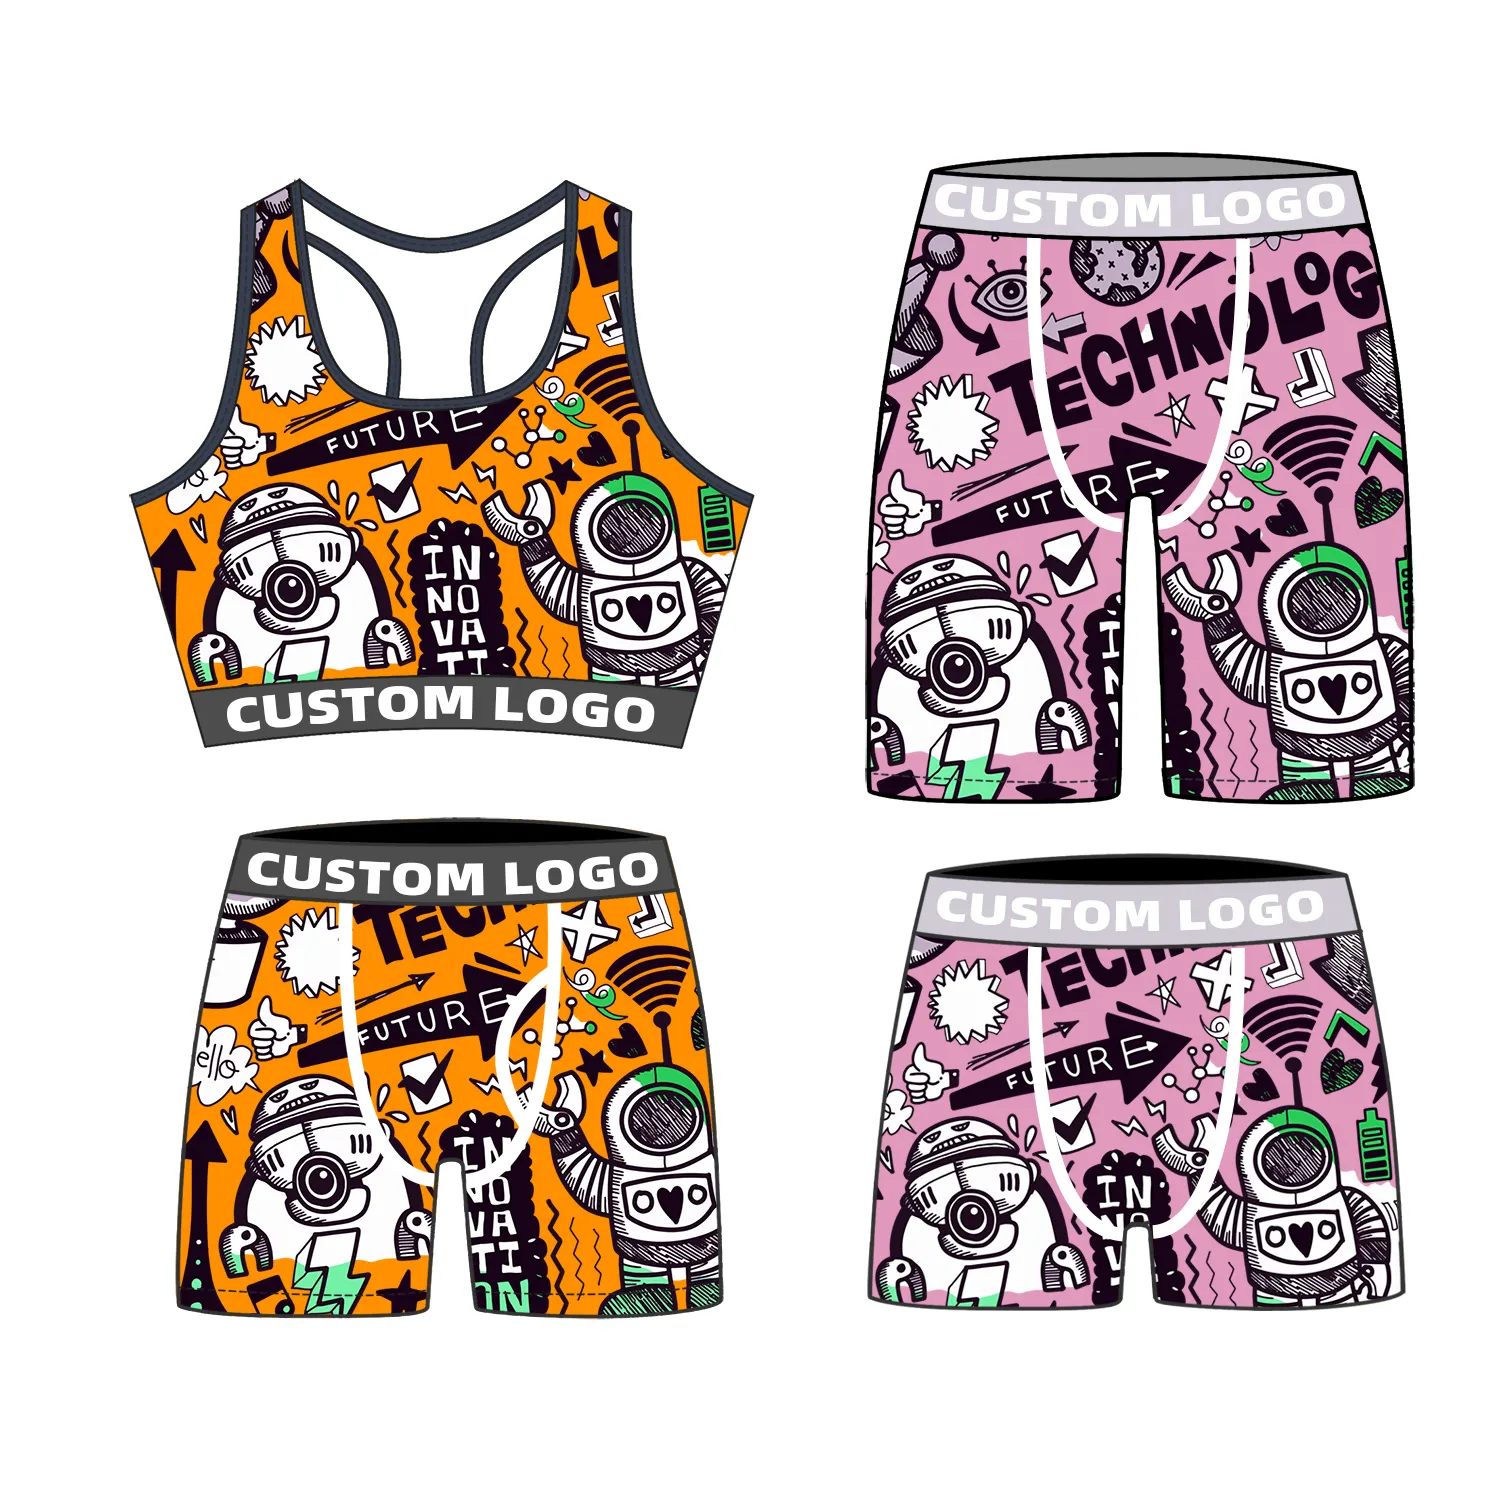 wholesale custom logo spandex calzoncillos polyester interior women bra and panties set men's shorts boxer briefs underwear